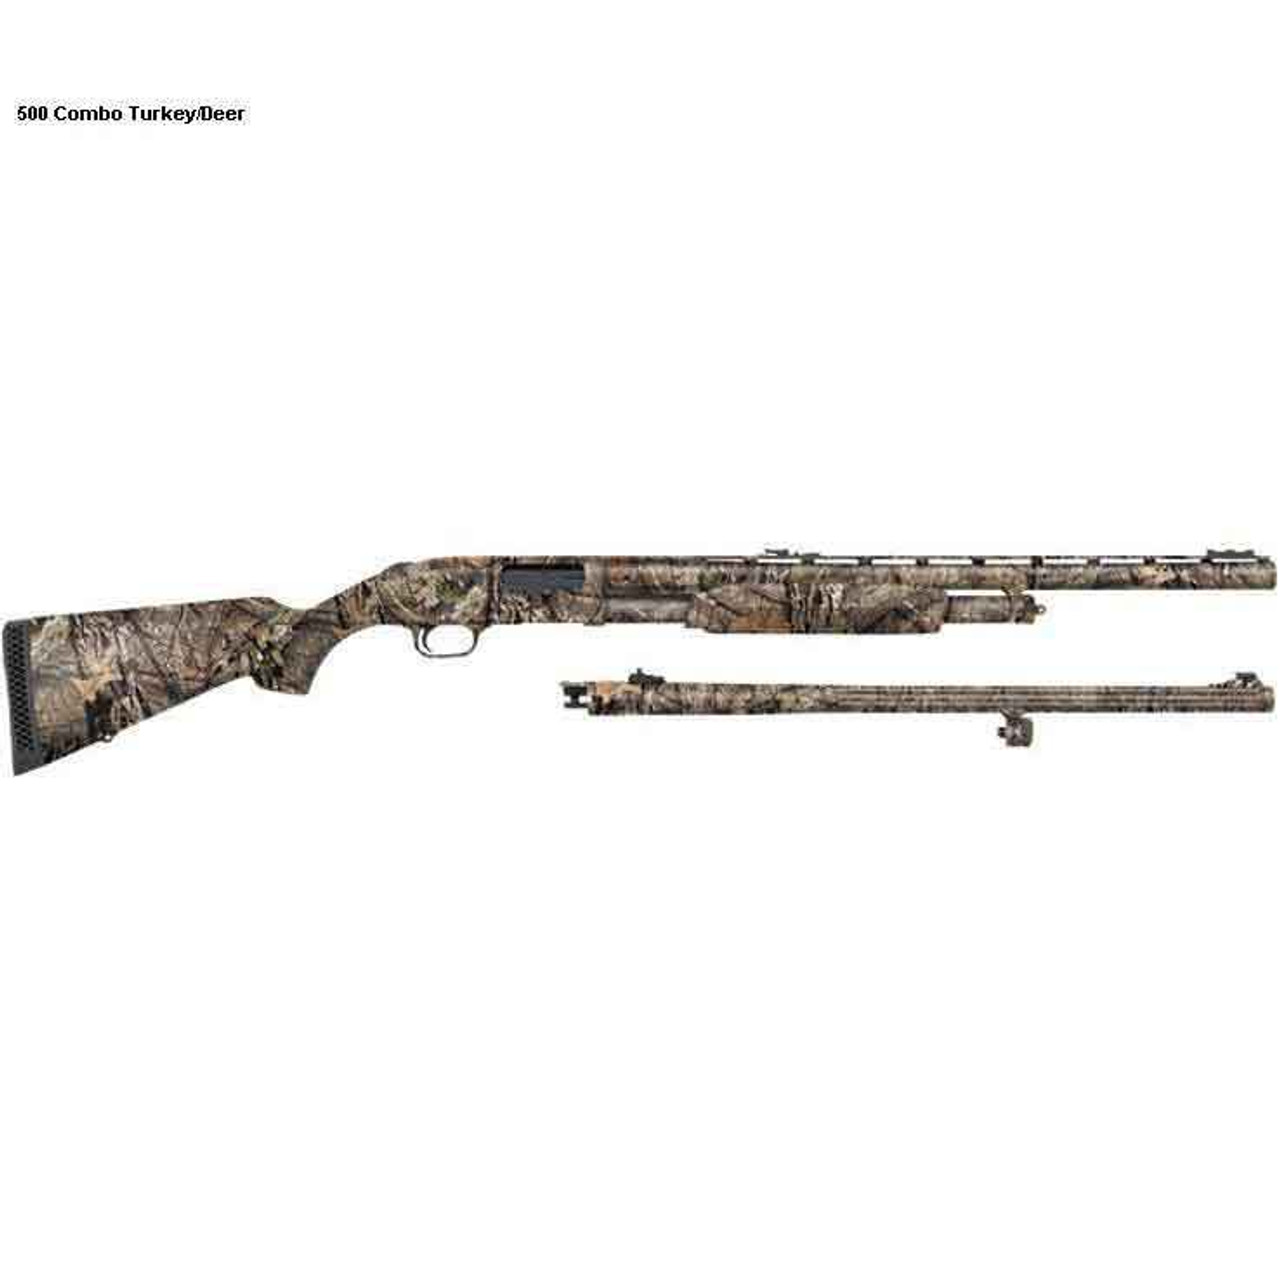 Mossberg 500 Combo Turkey/Deer Pump Shotgun 12 GA